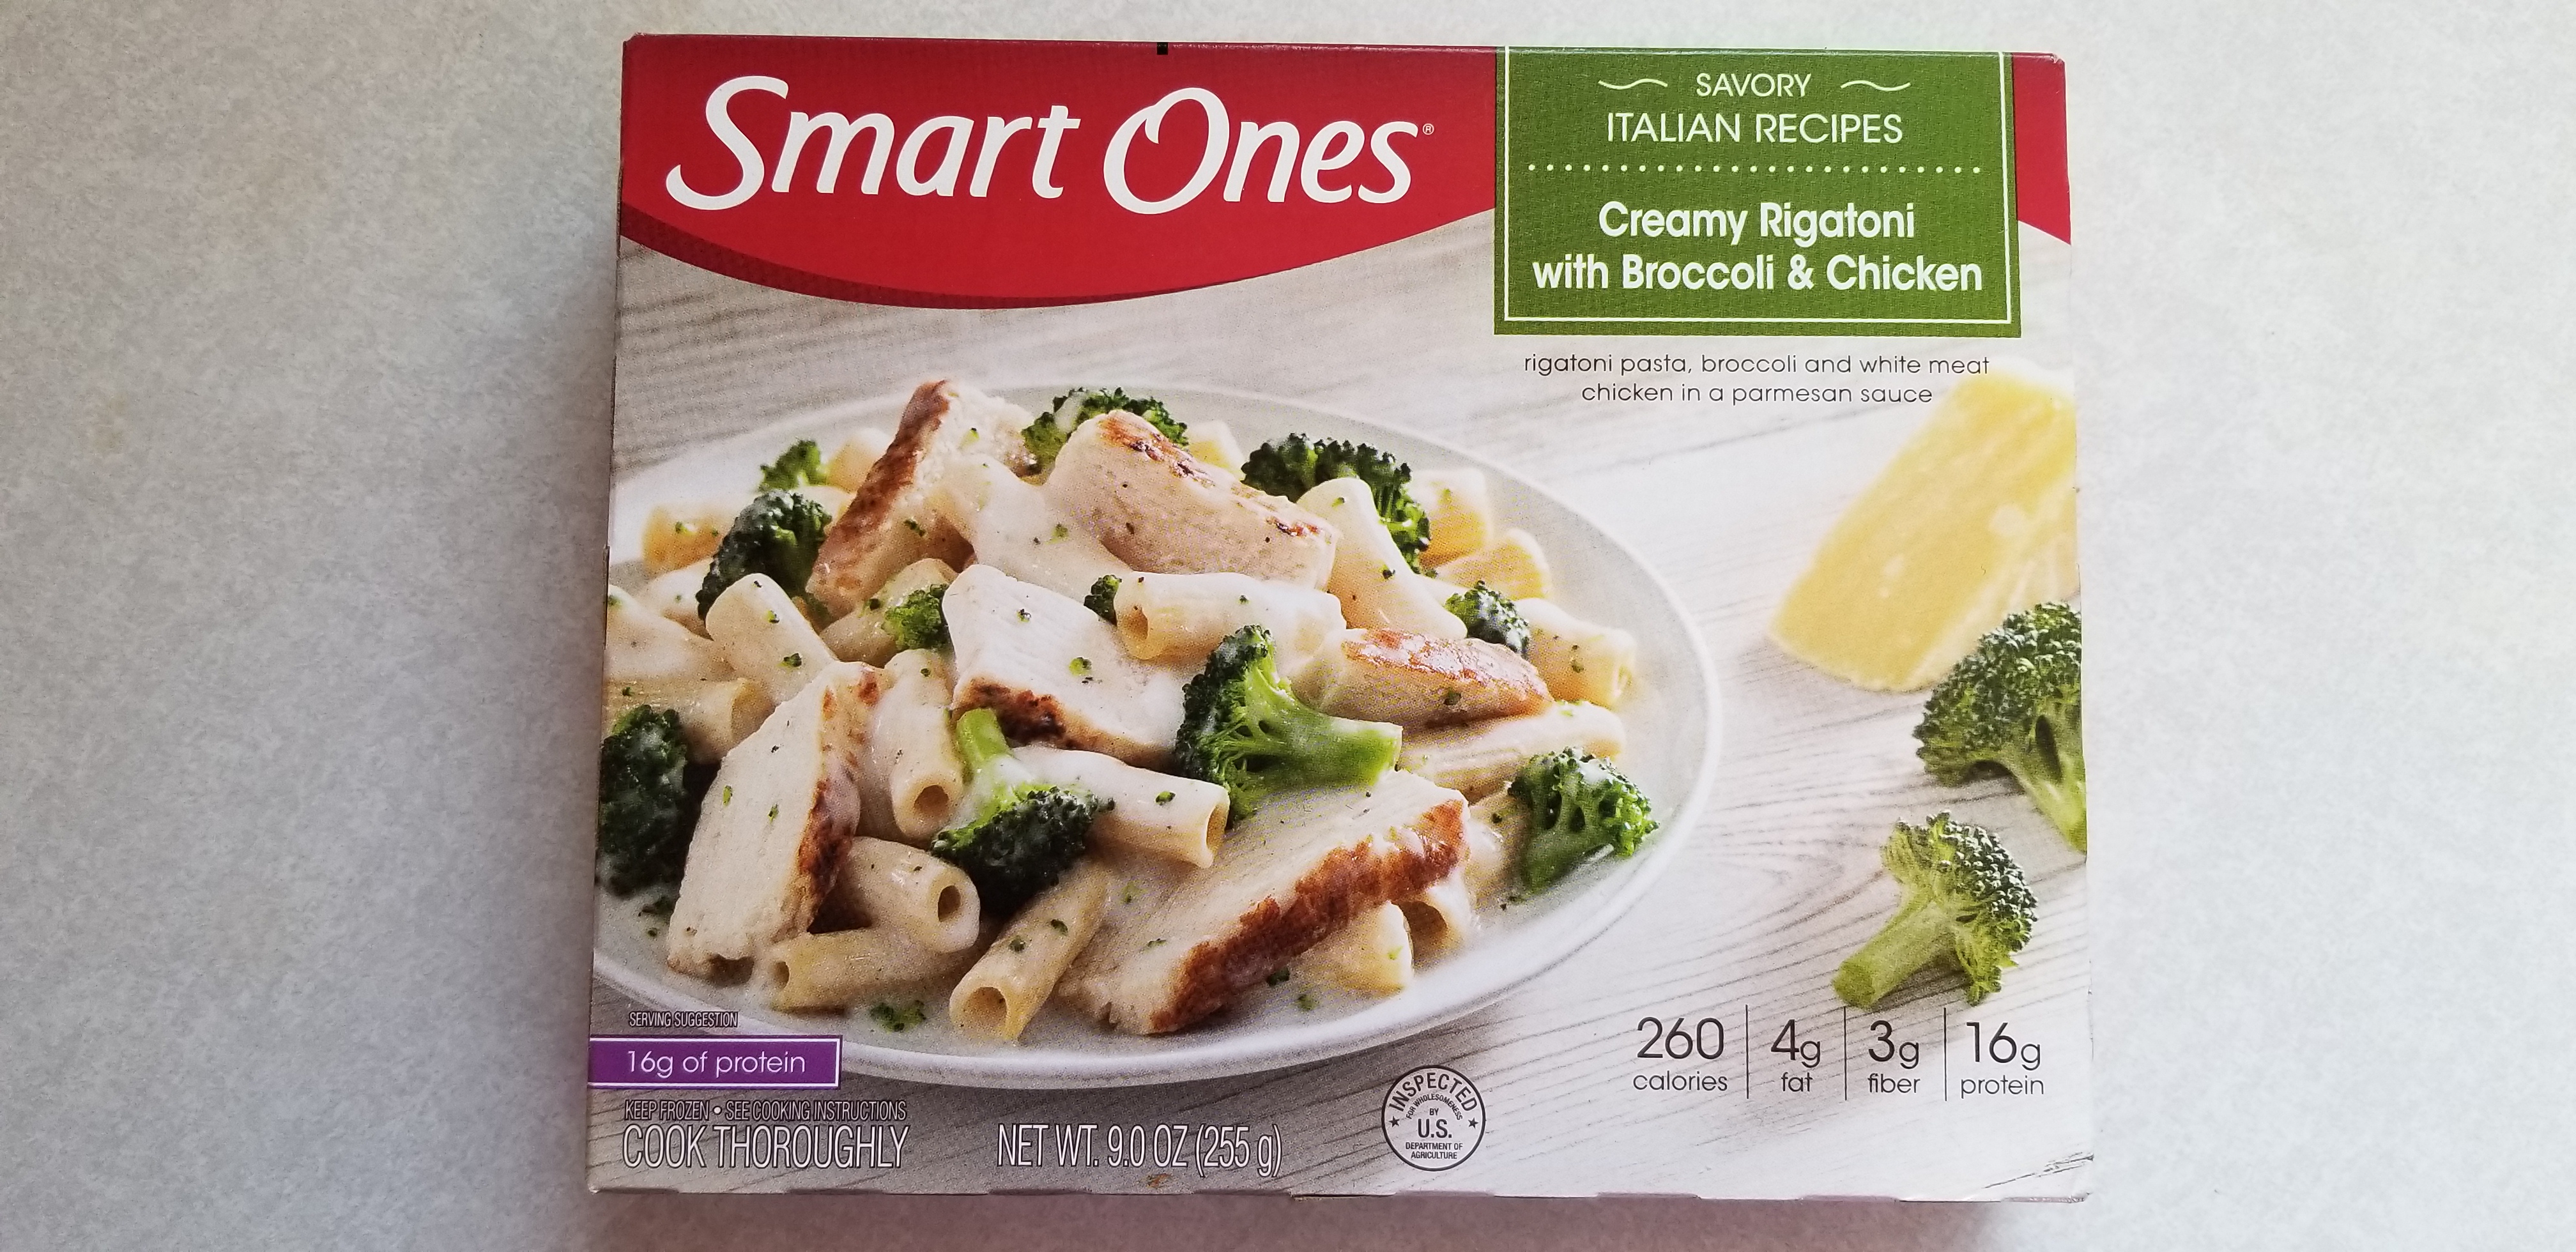 Smart Ones Creamy Rigatoni with Broccoli & Chicken